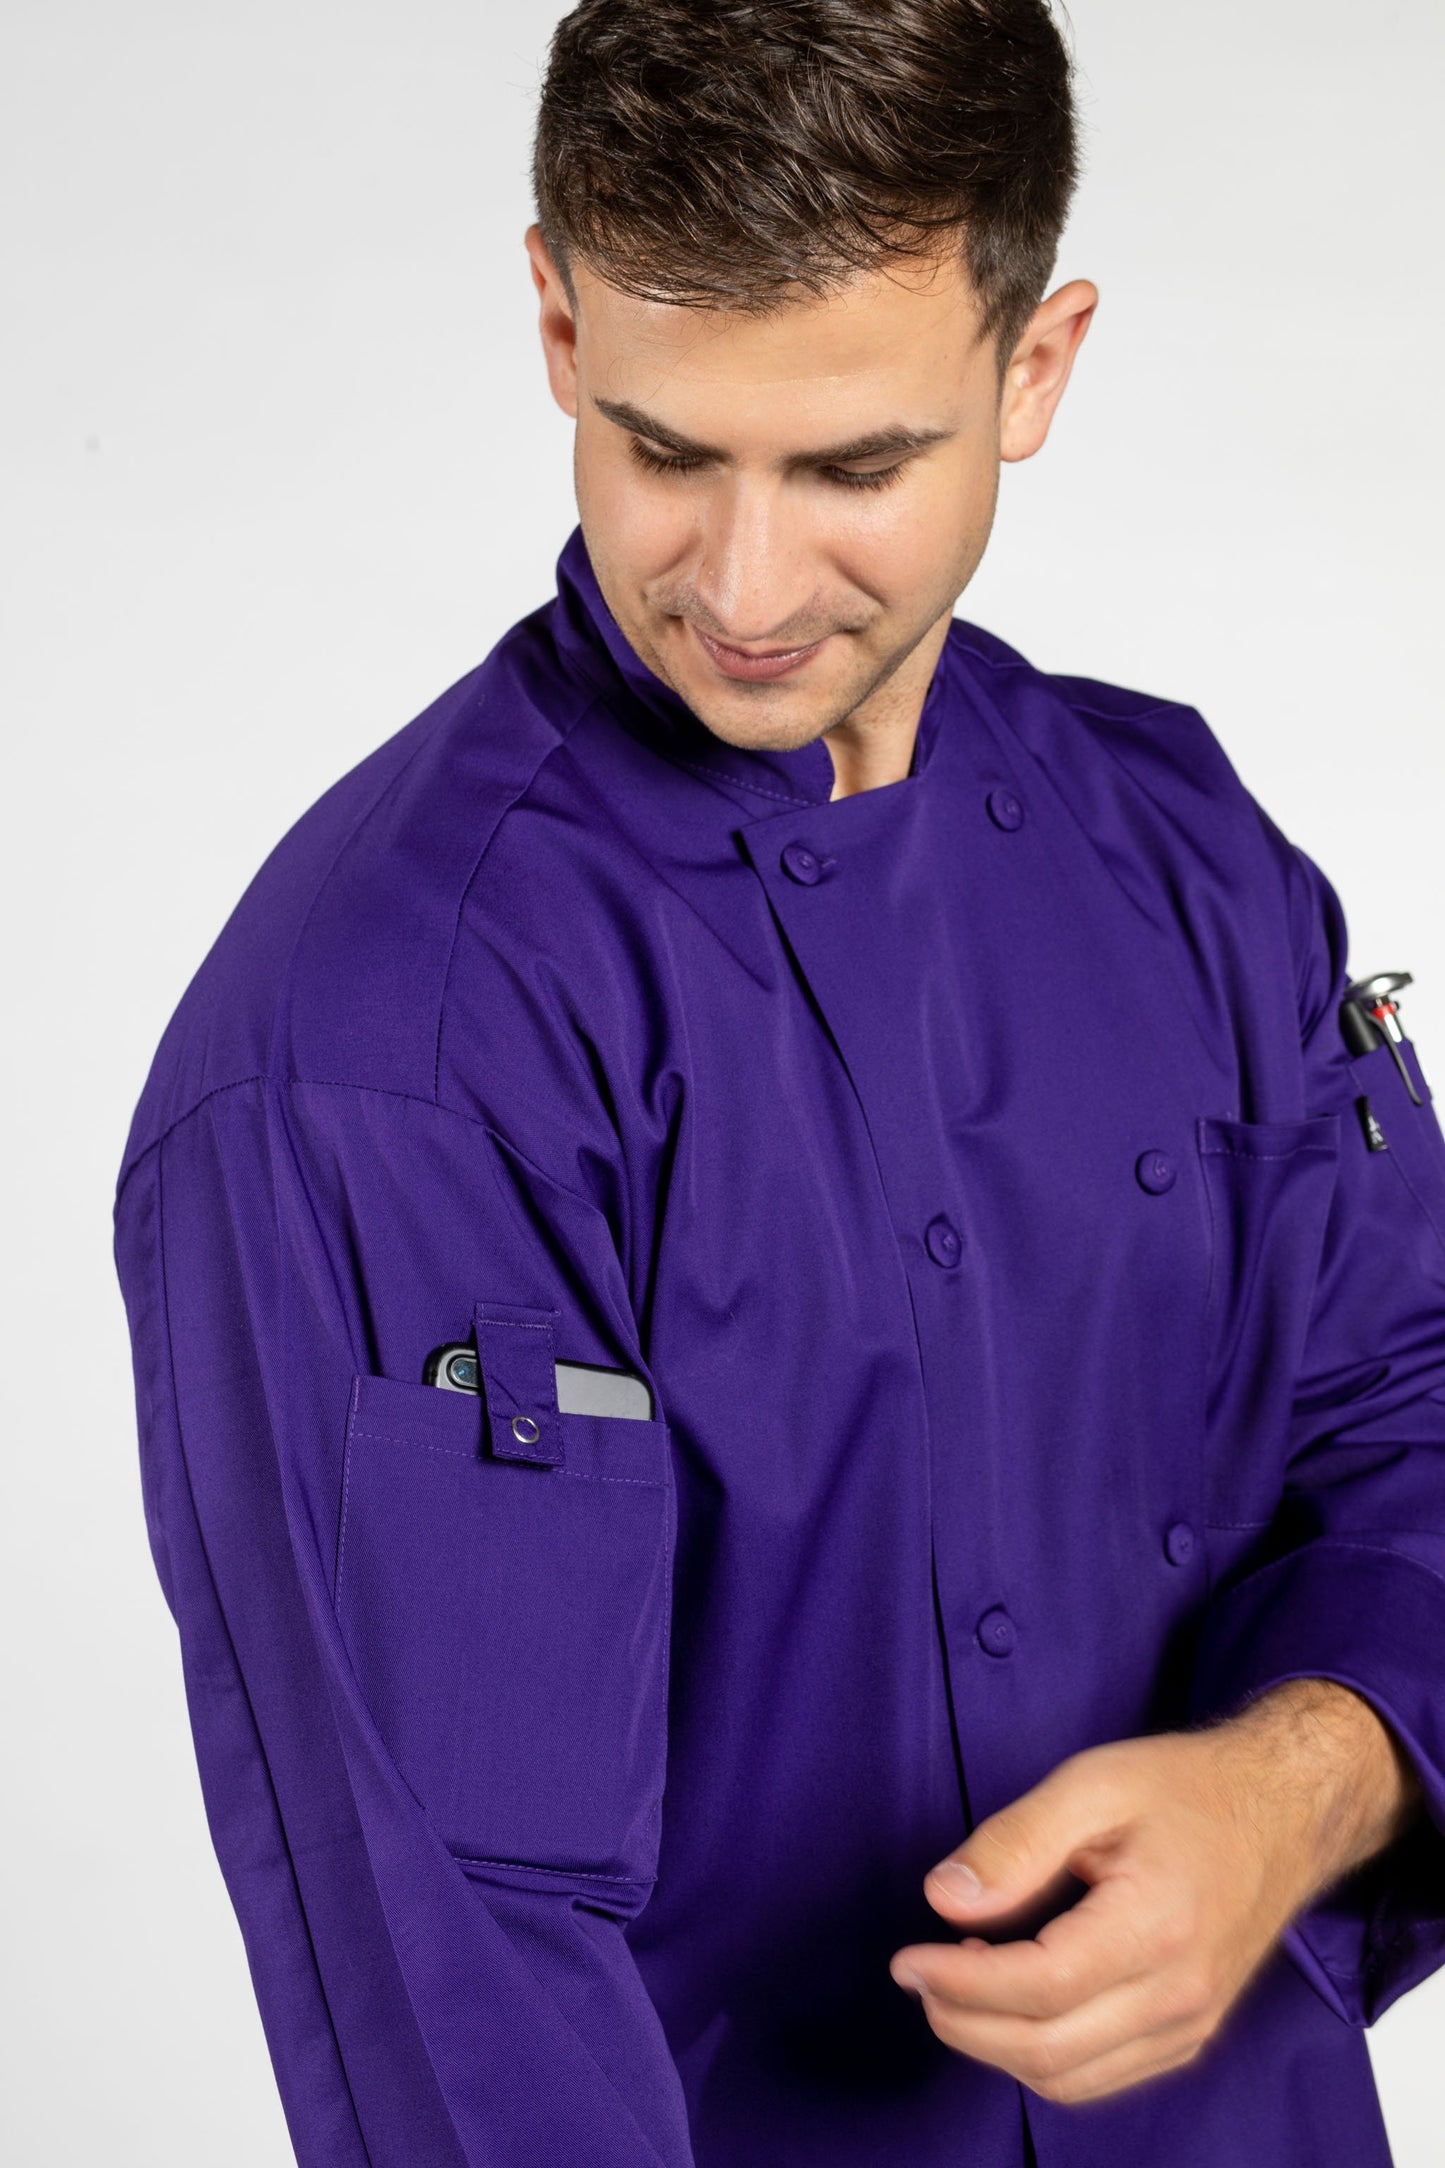 Pulse Chef Coat #0706